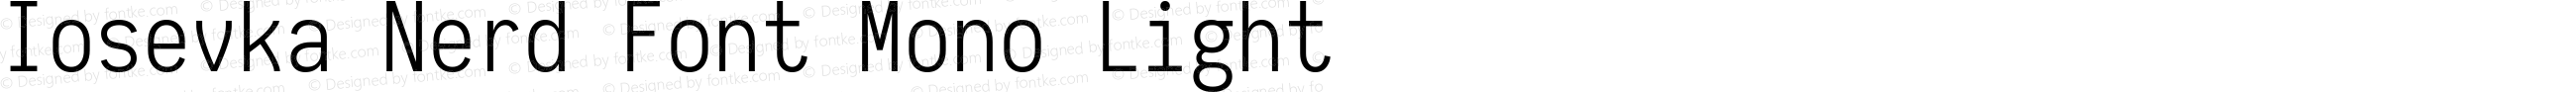 Iosevka Light Nerd Font Complete Mono